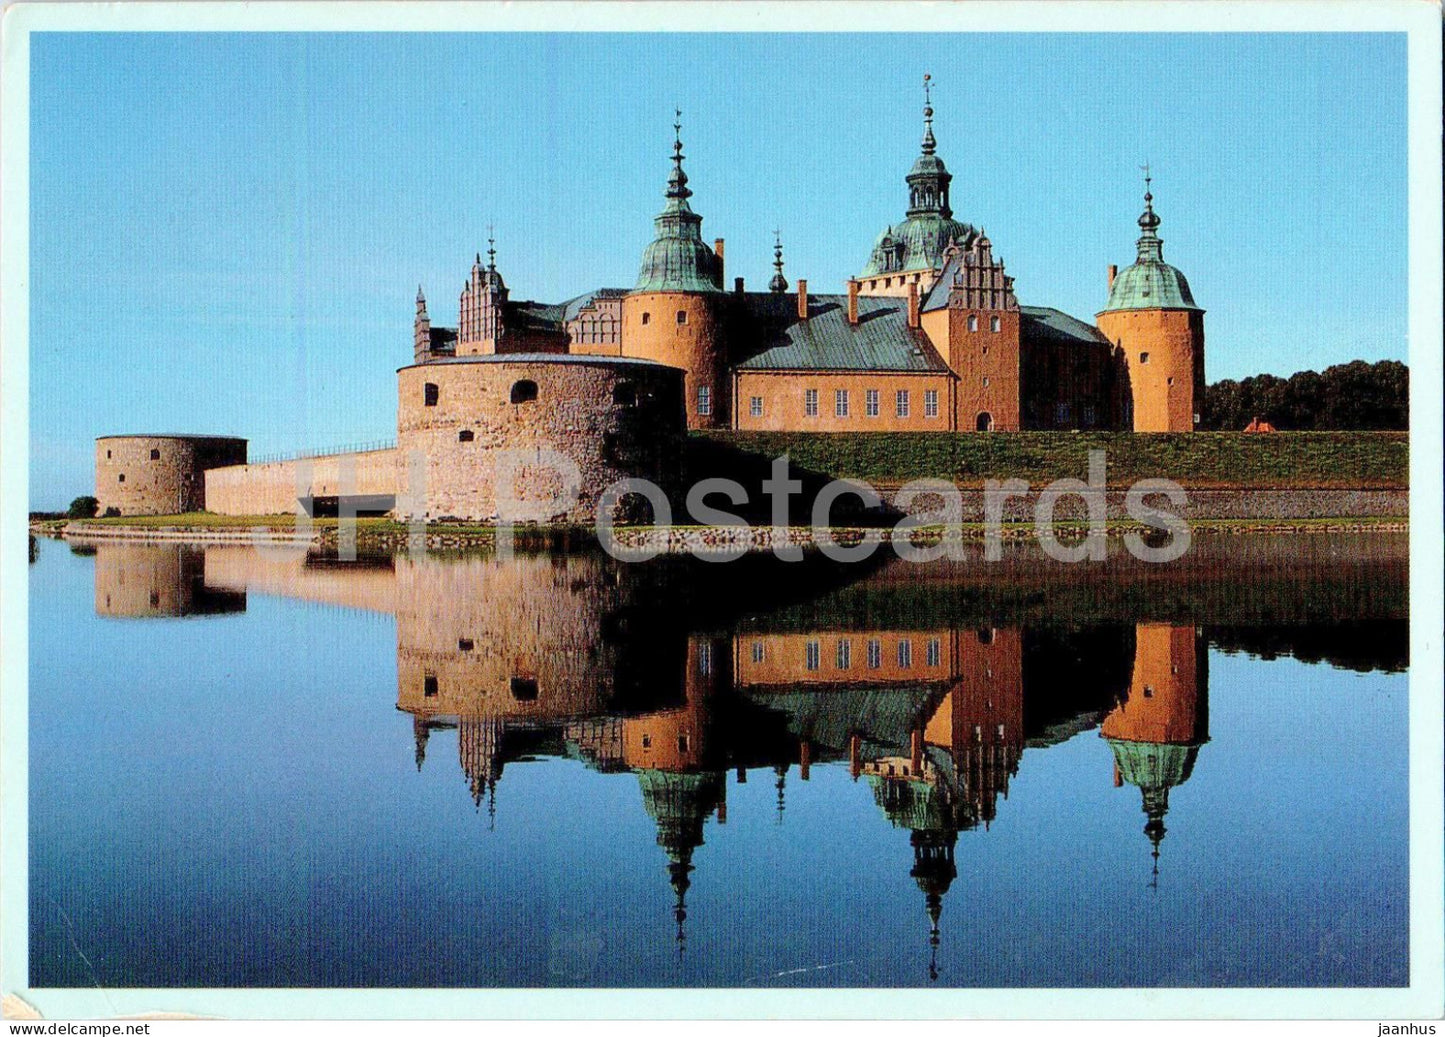 Kalmar Slott - Slottspeglingar - castle reflections - 9114 - Sweden - used - JH Postcards